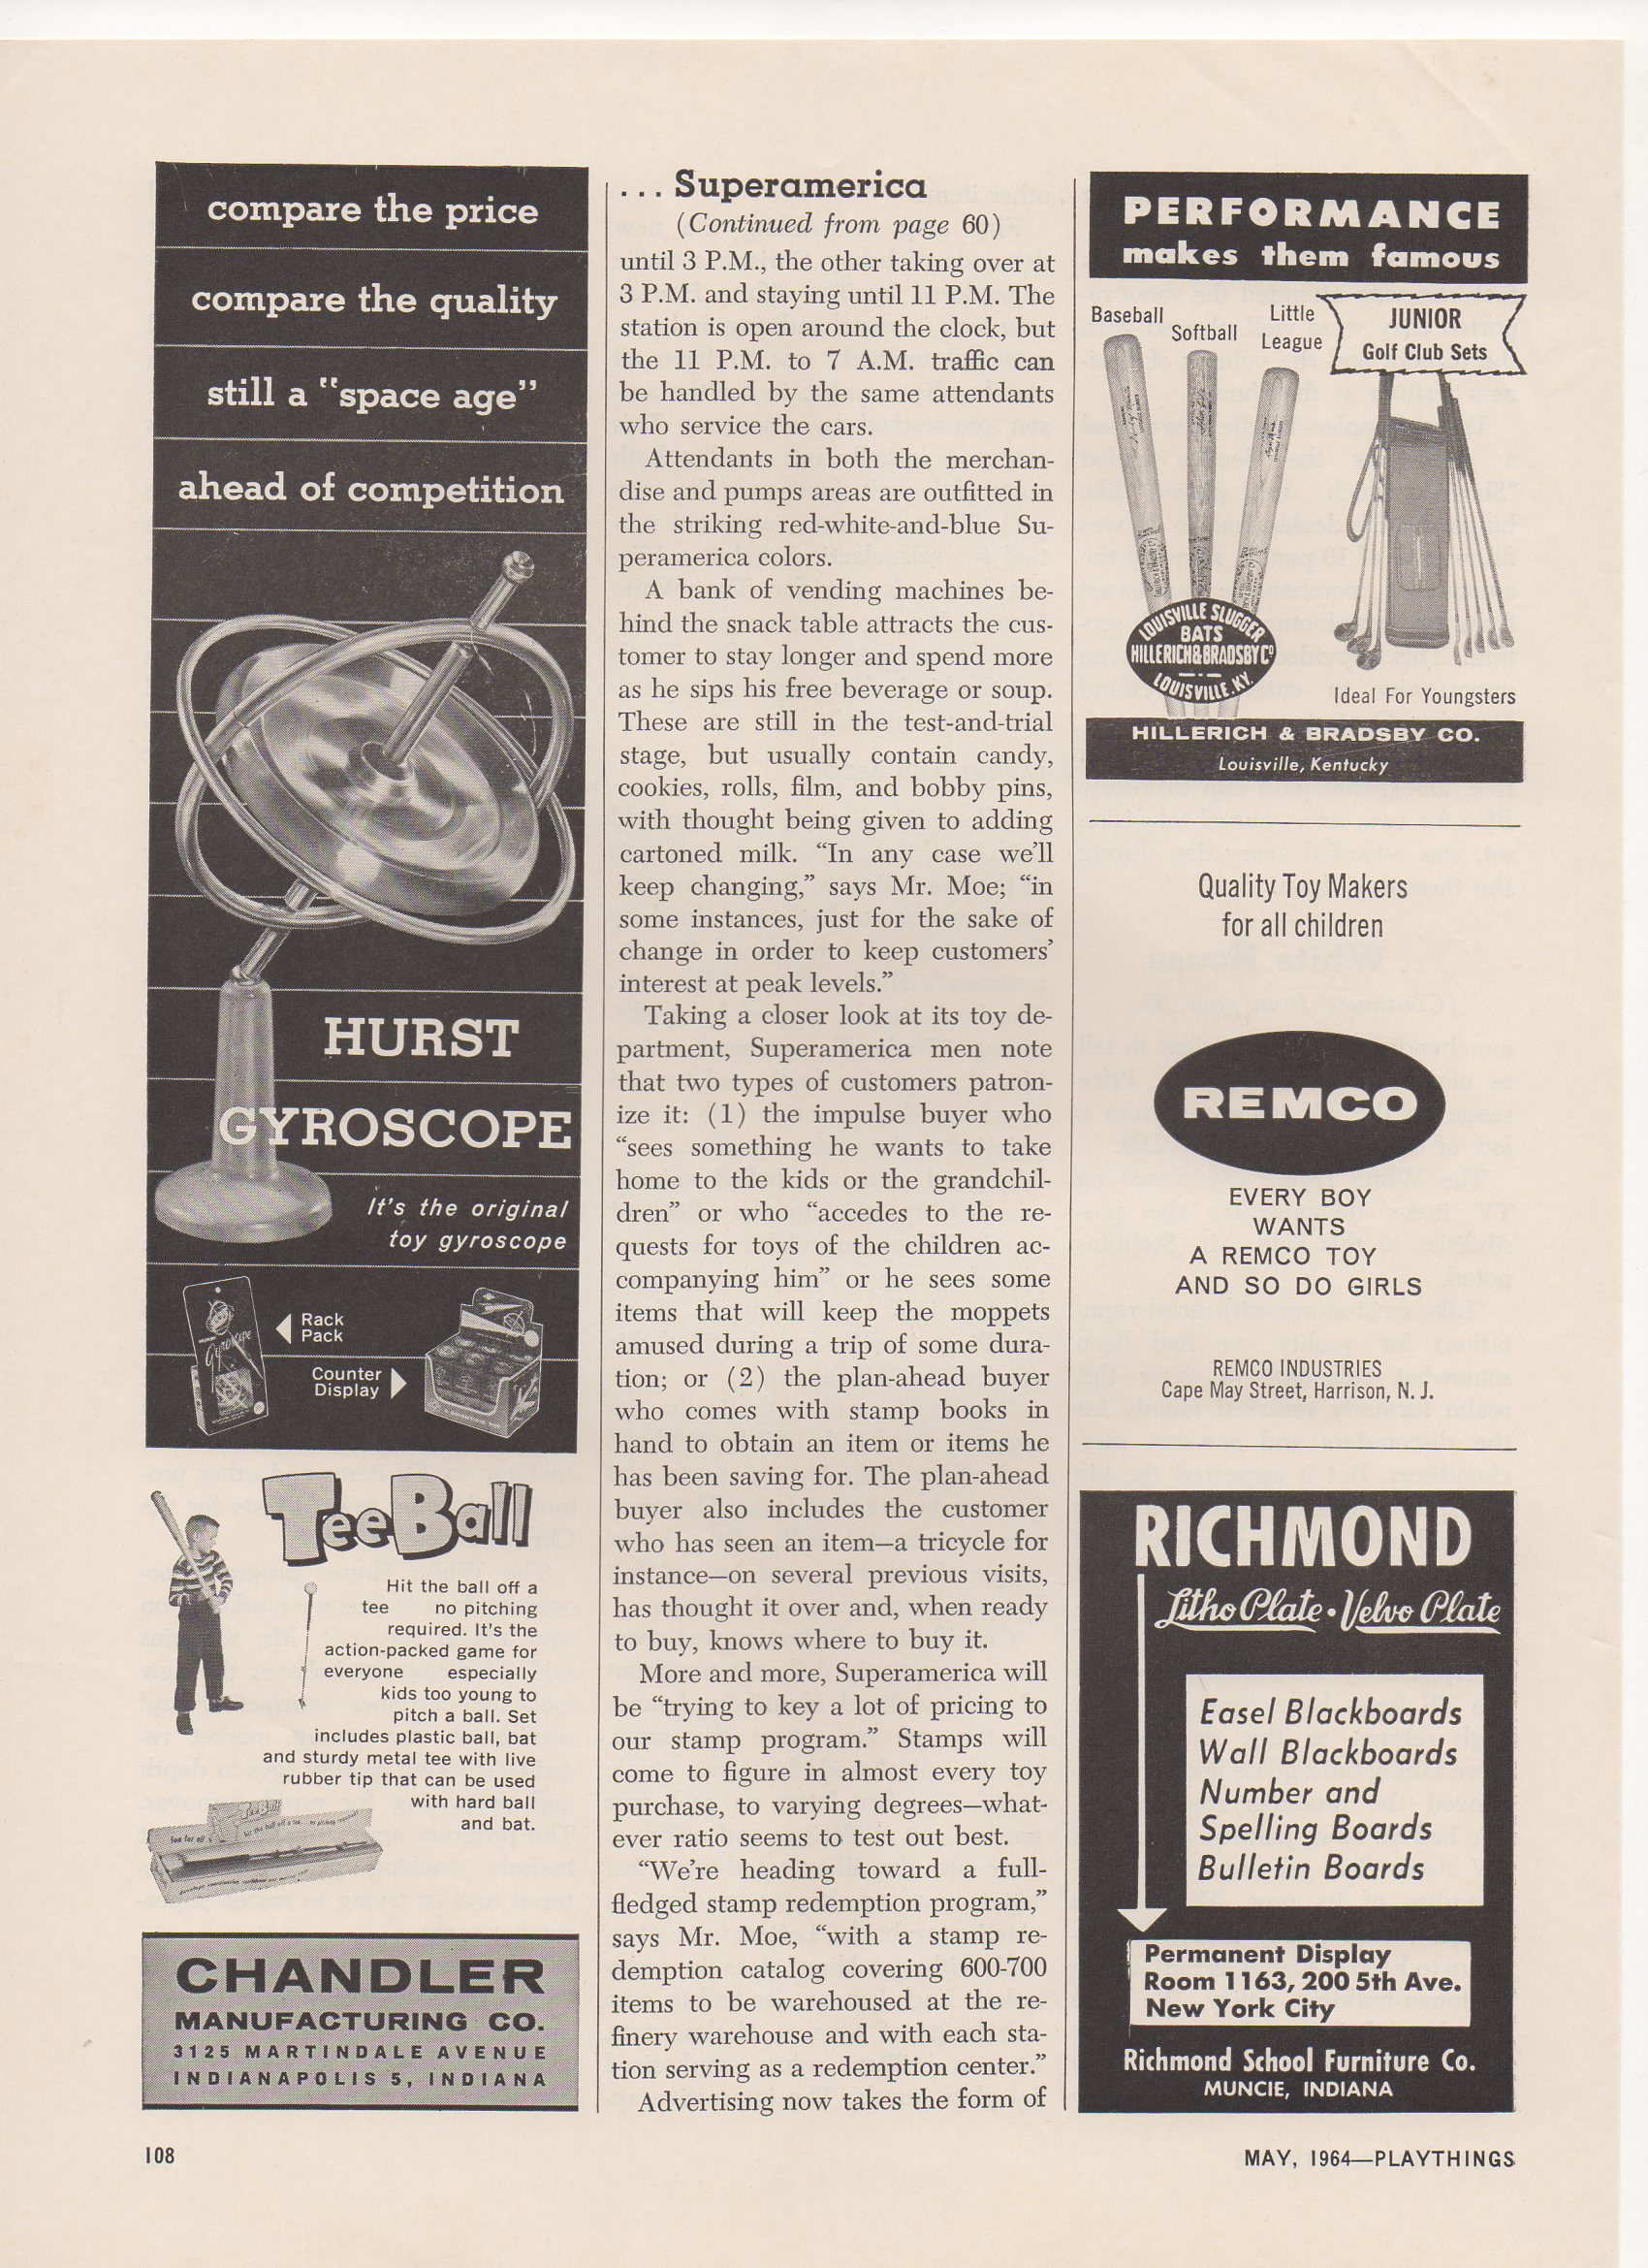 1964 playthings magazine, may